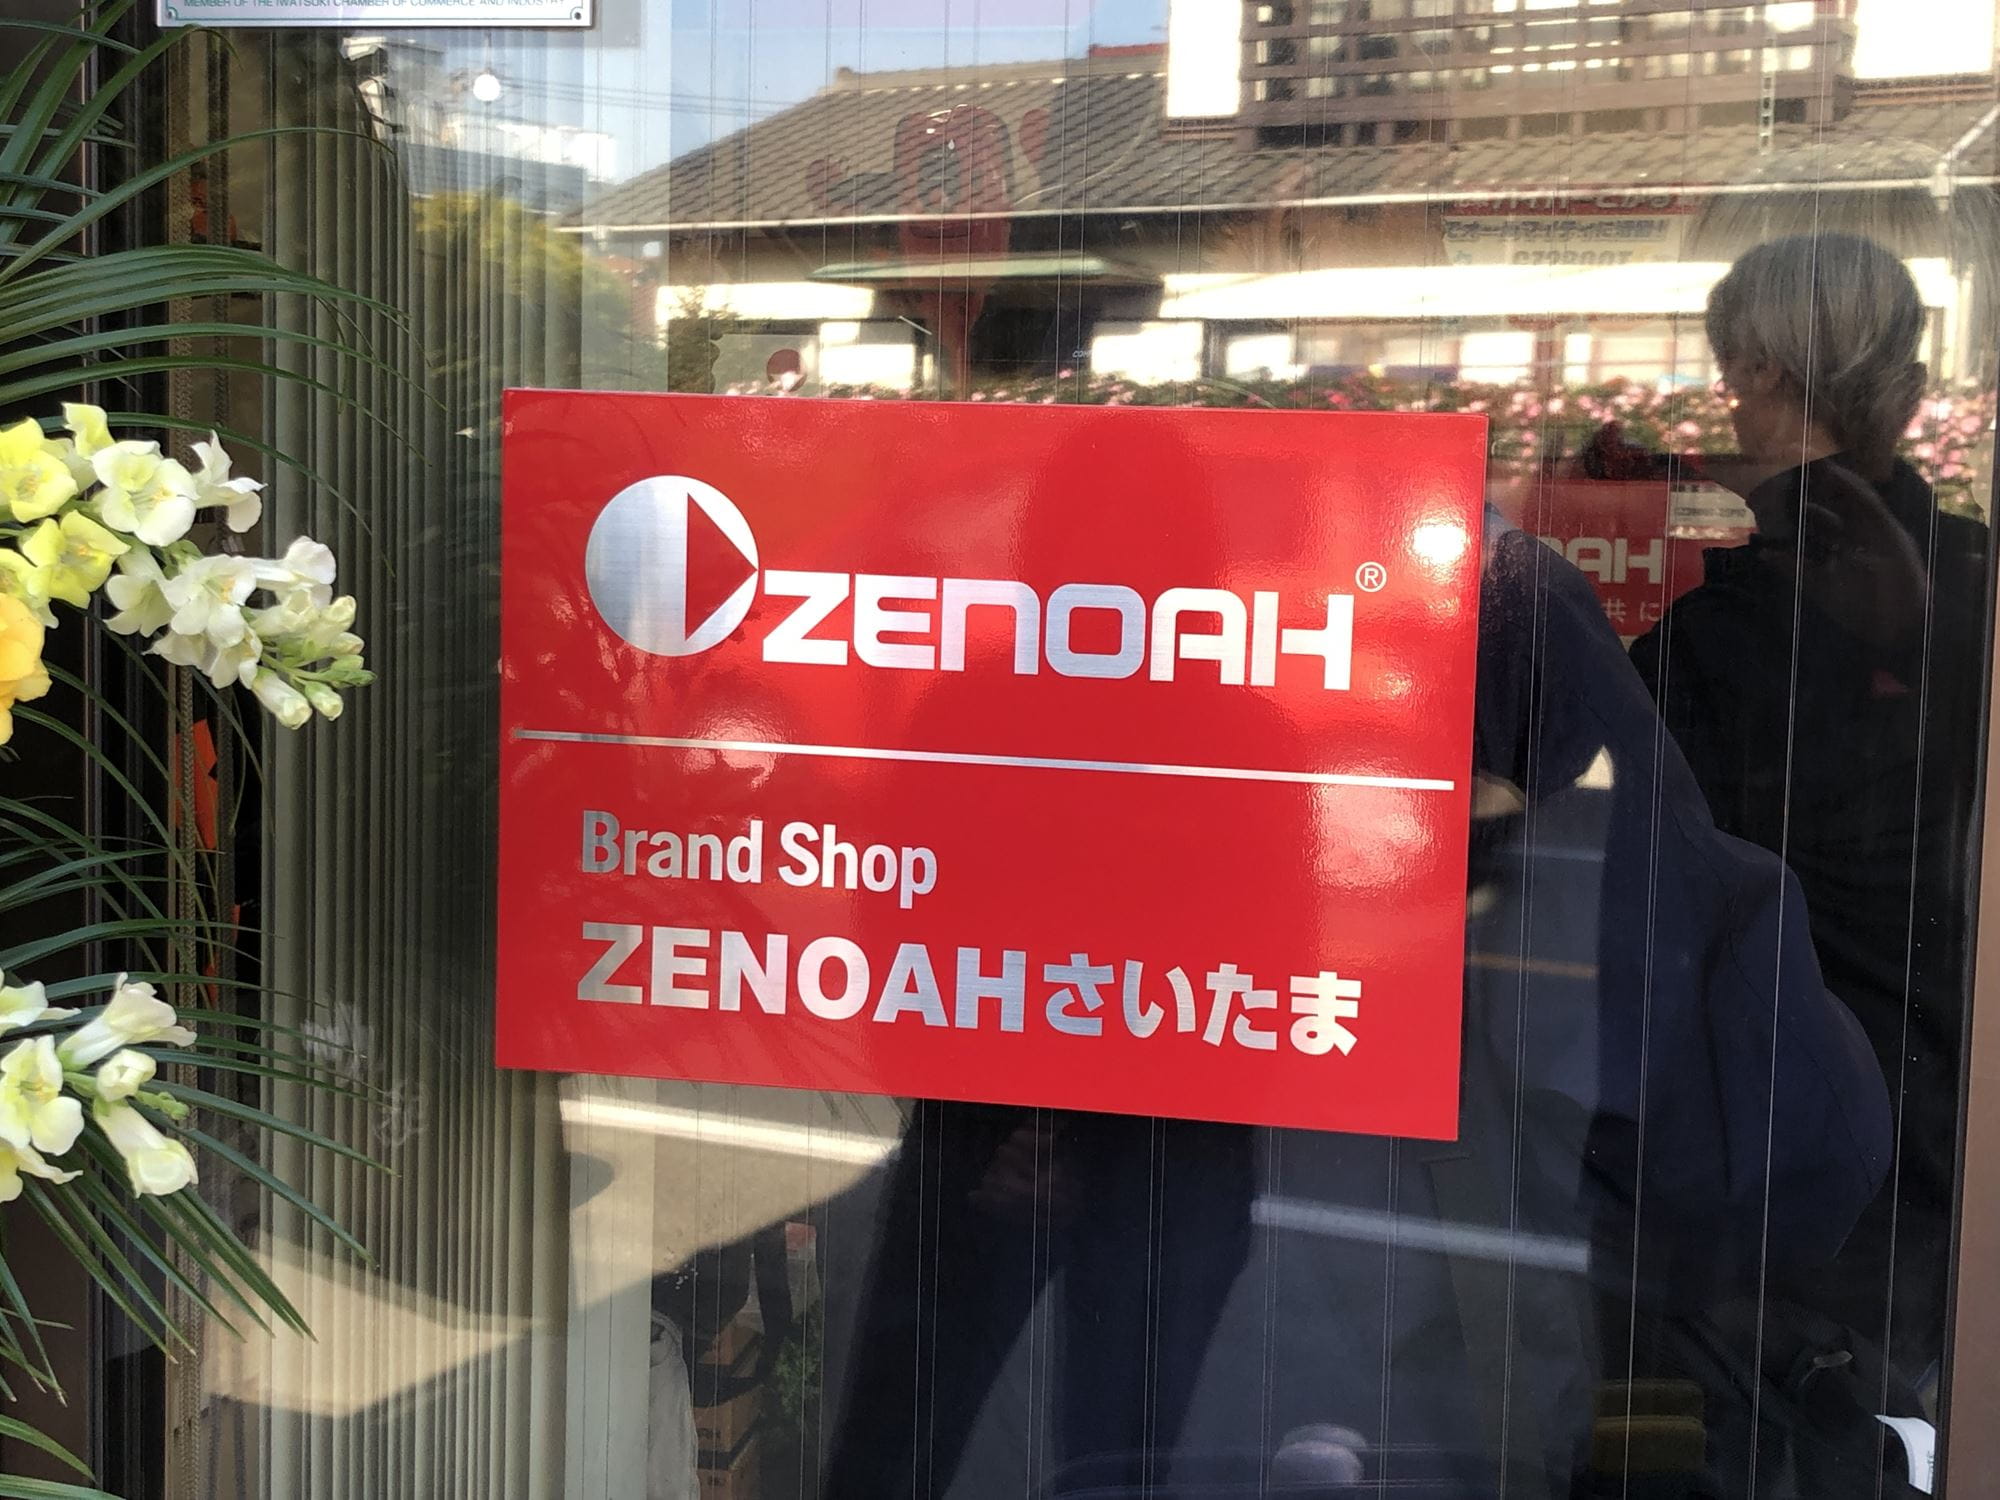 Brand Shop ZENOAH さいたま 内観